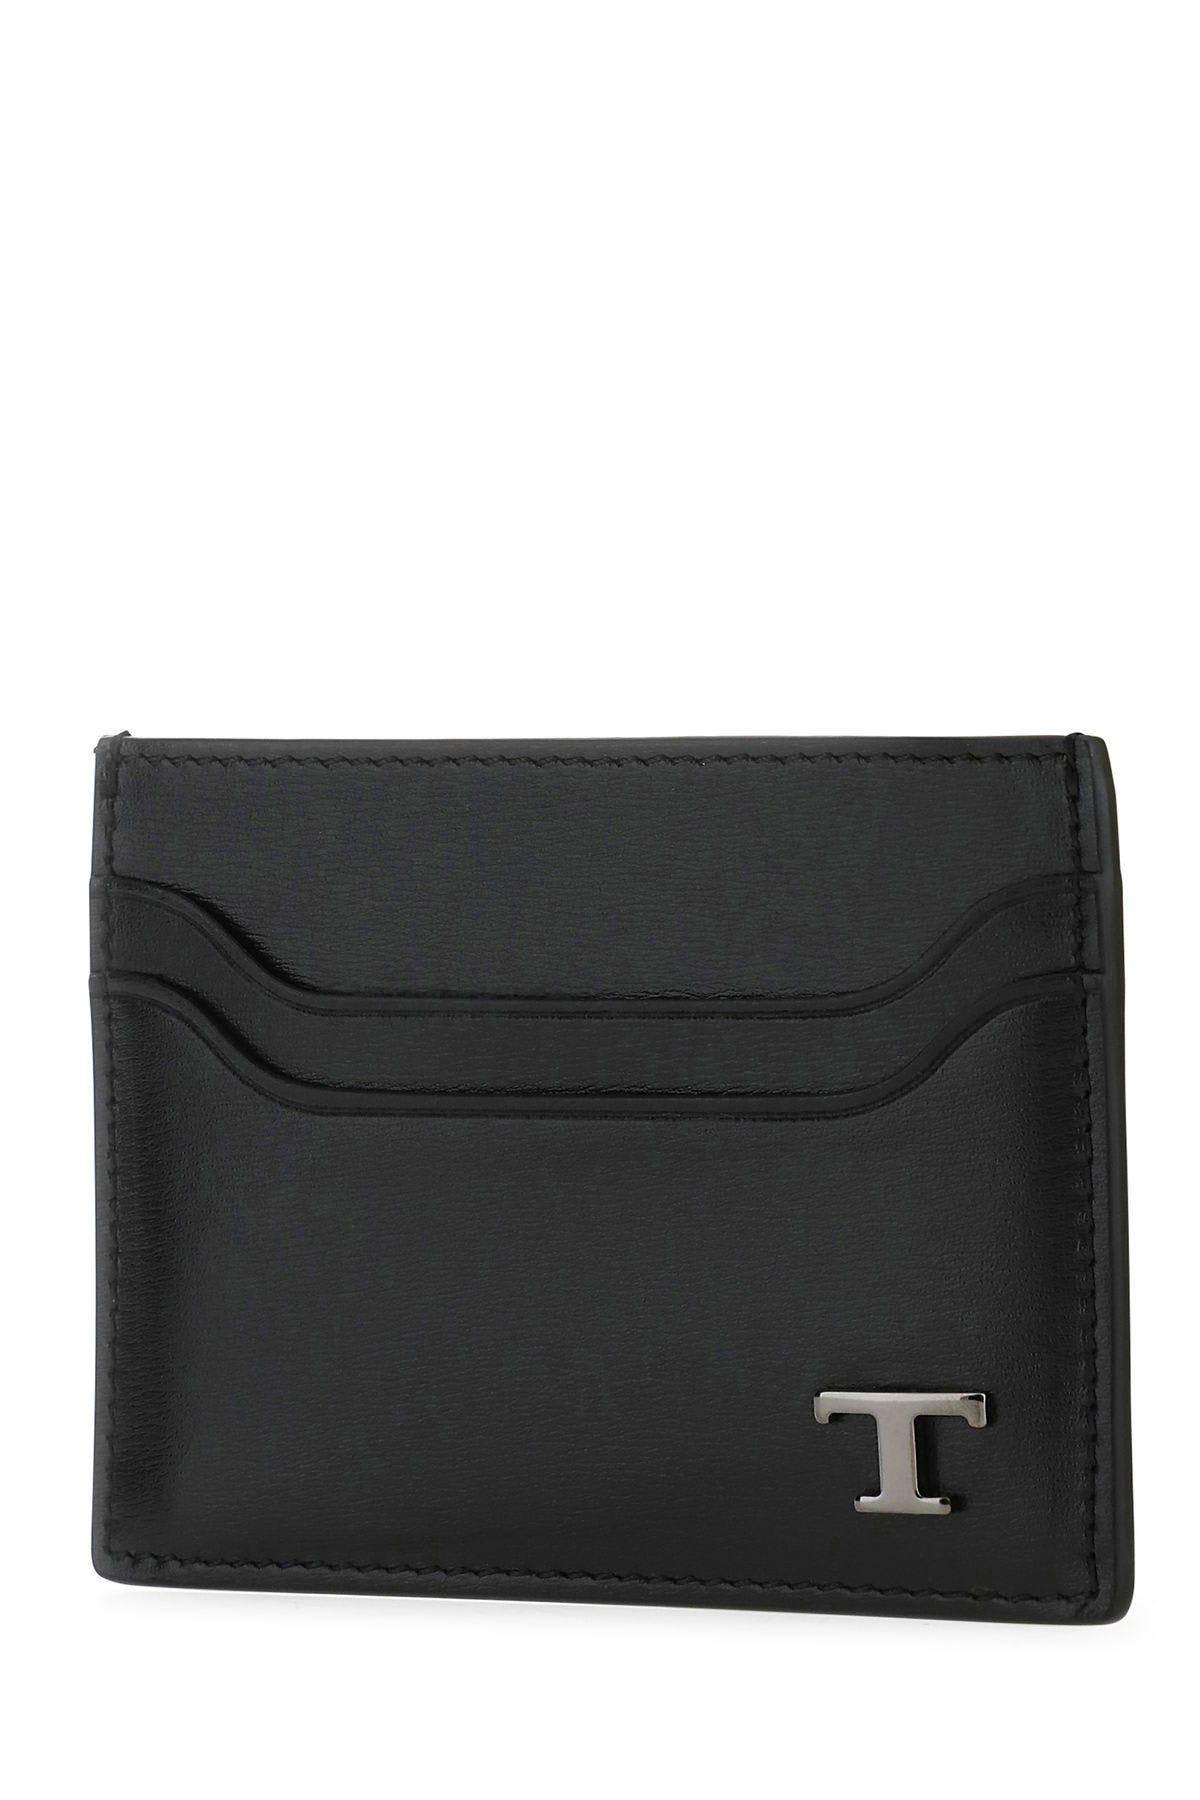 Shop Tod's Black Leather Card Holder Tods